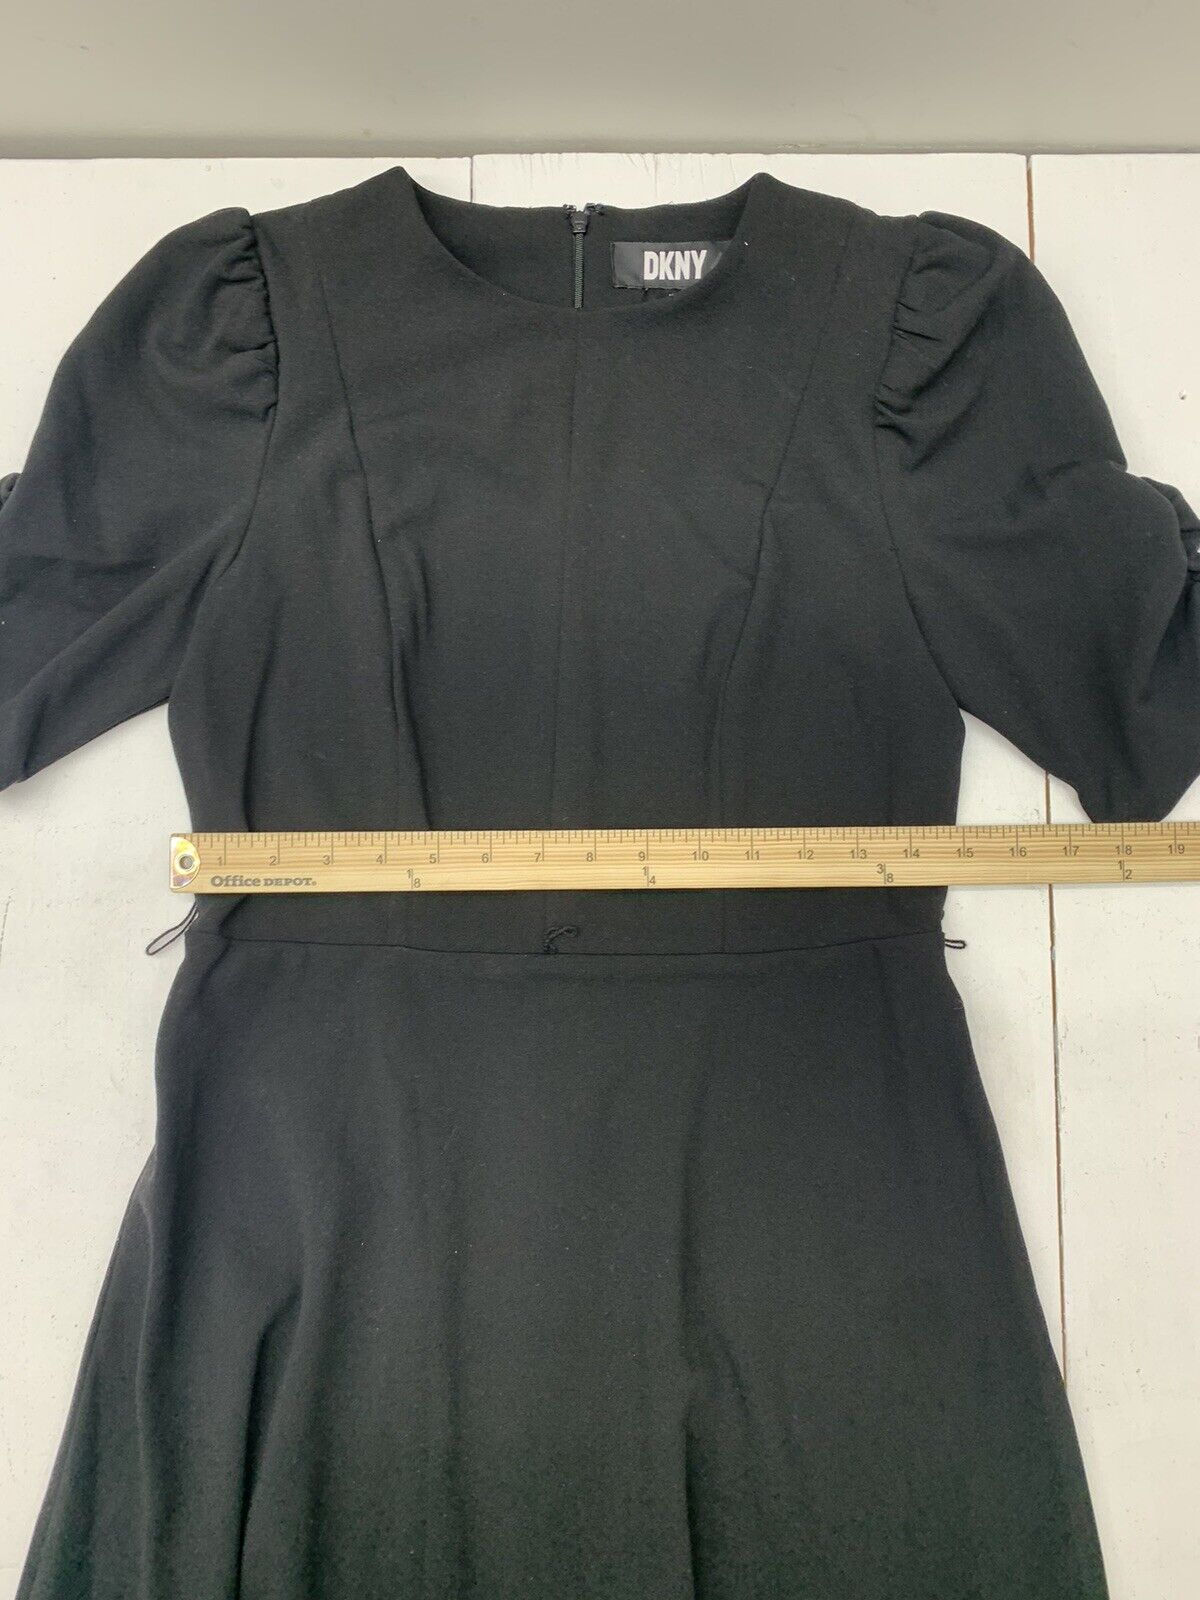 DKNY Womens Black Back Zip Dress Size 6 - beyond exchange